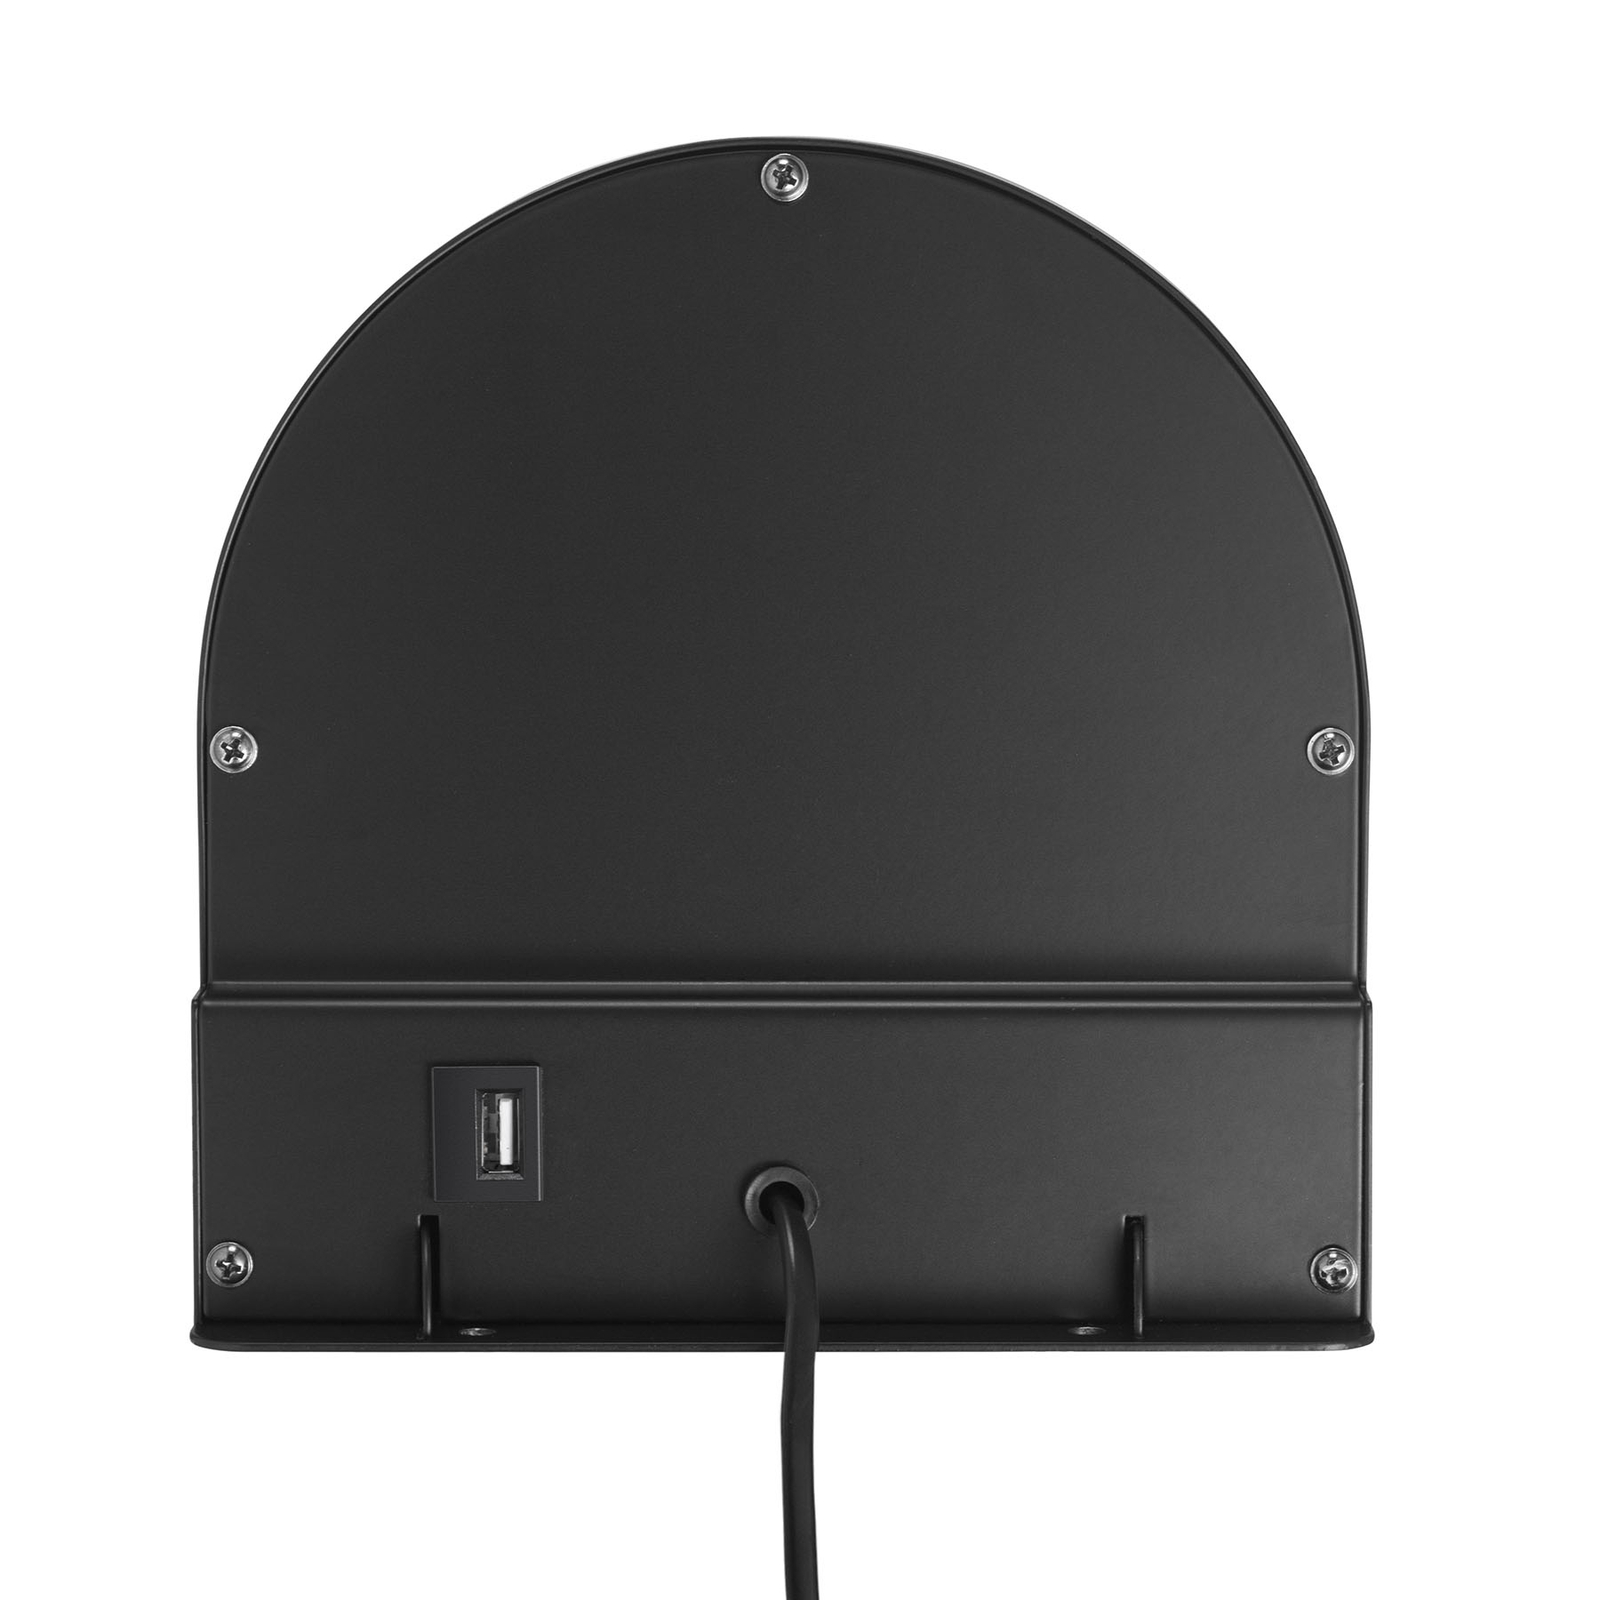 Cody wall light with shelf and USB port, black